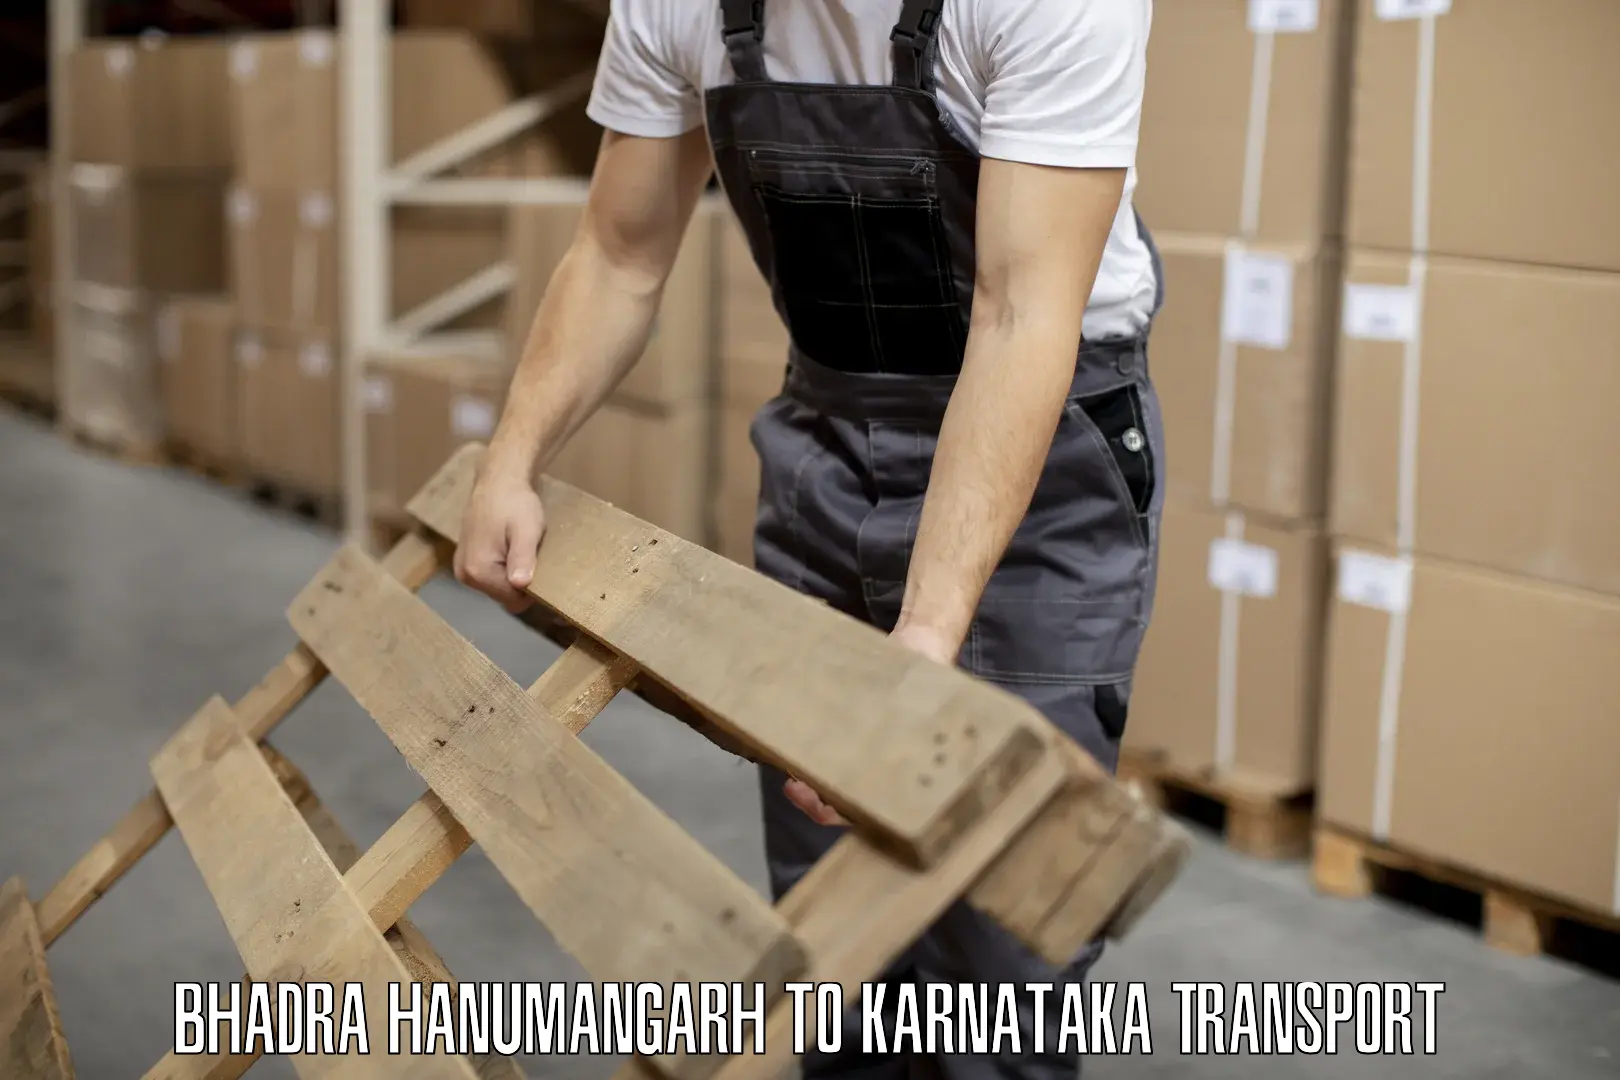 Delivery service Bhadra Hanumangarh to Karnataka